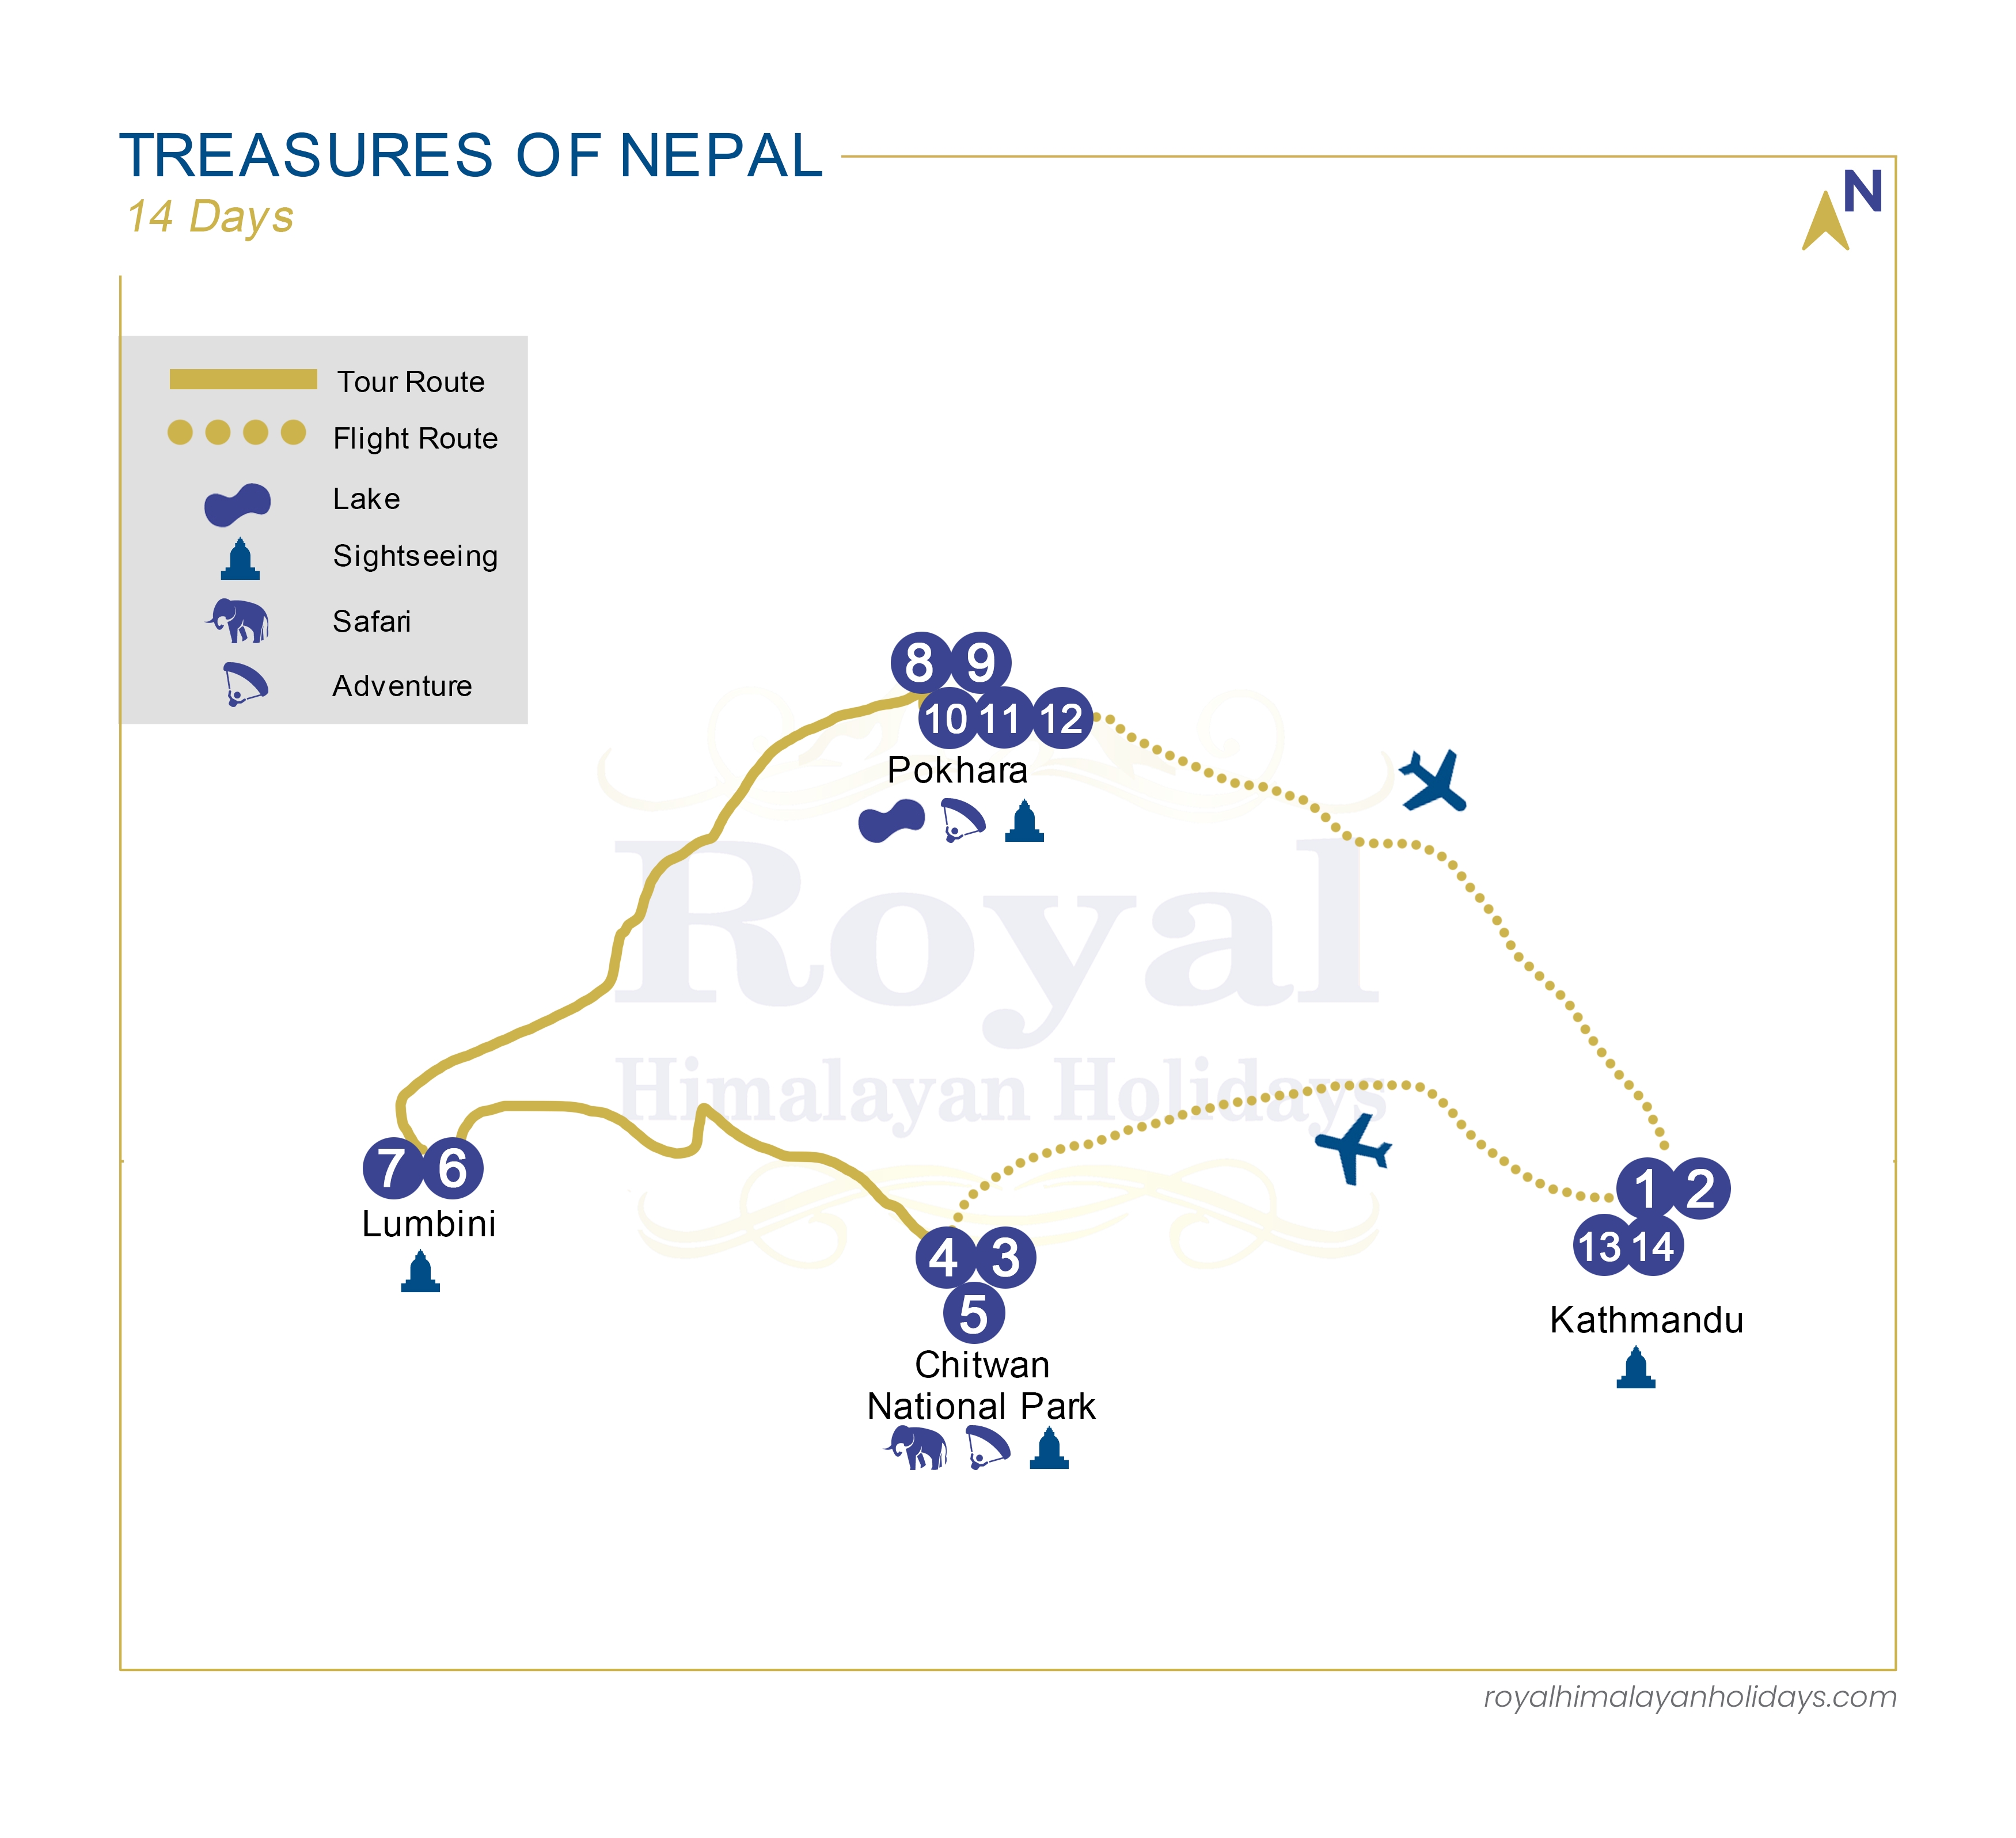 Treasures of Nepal tour